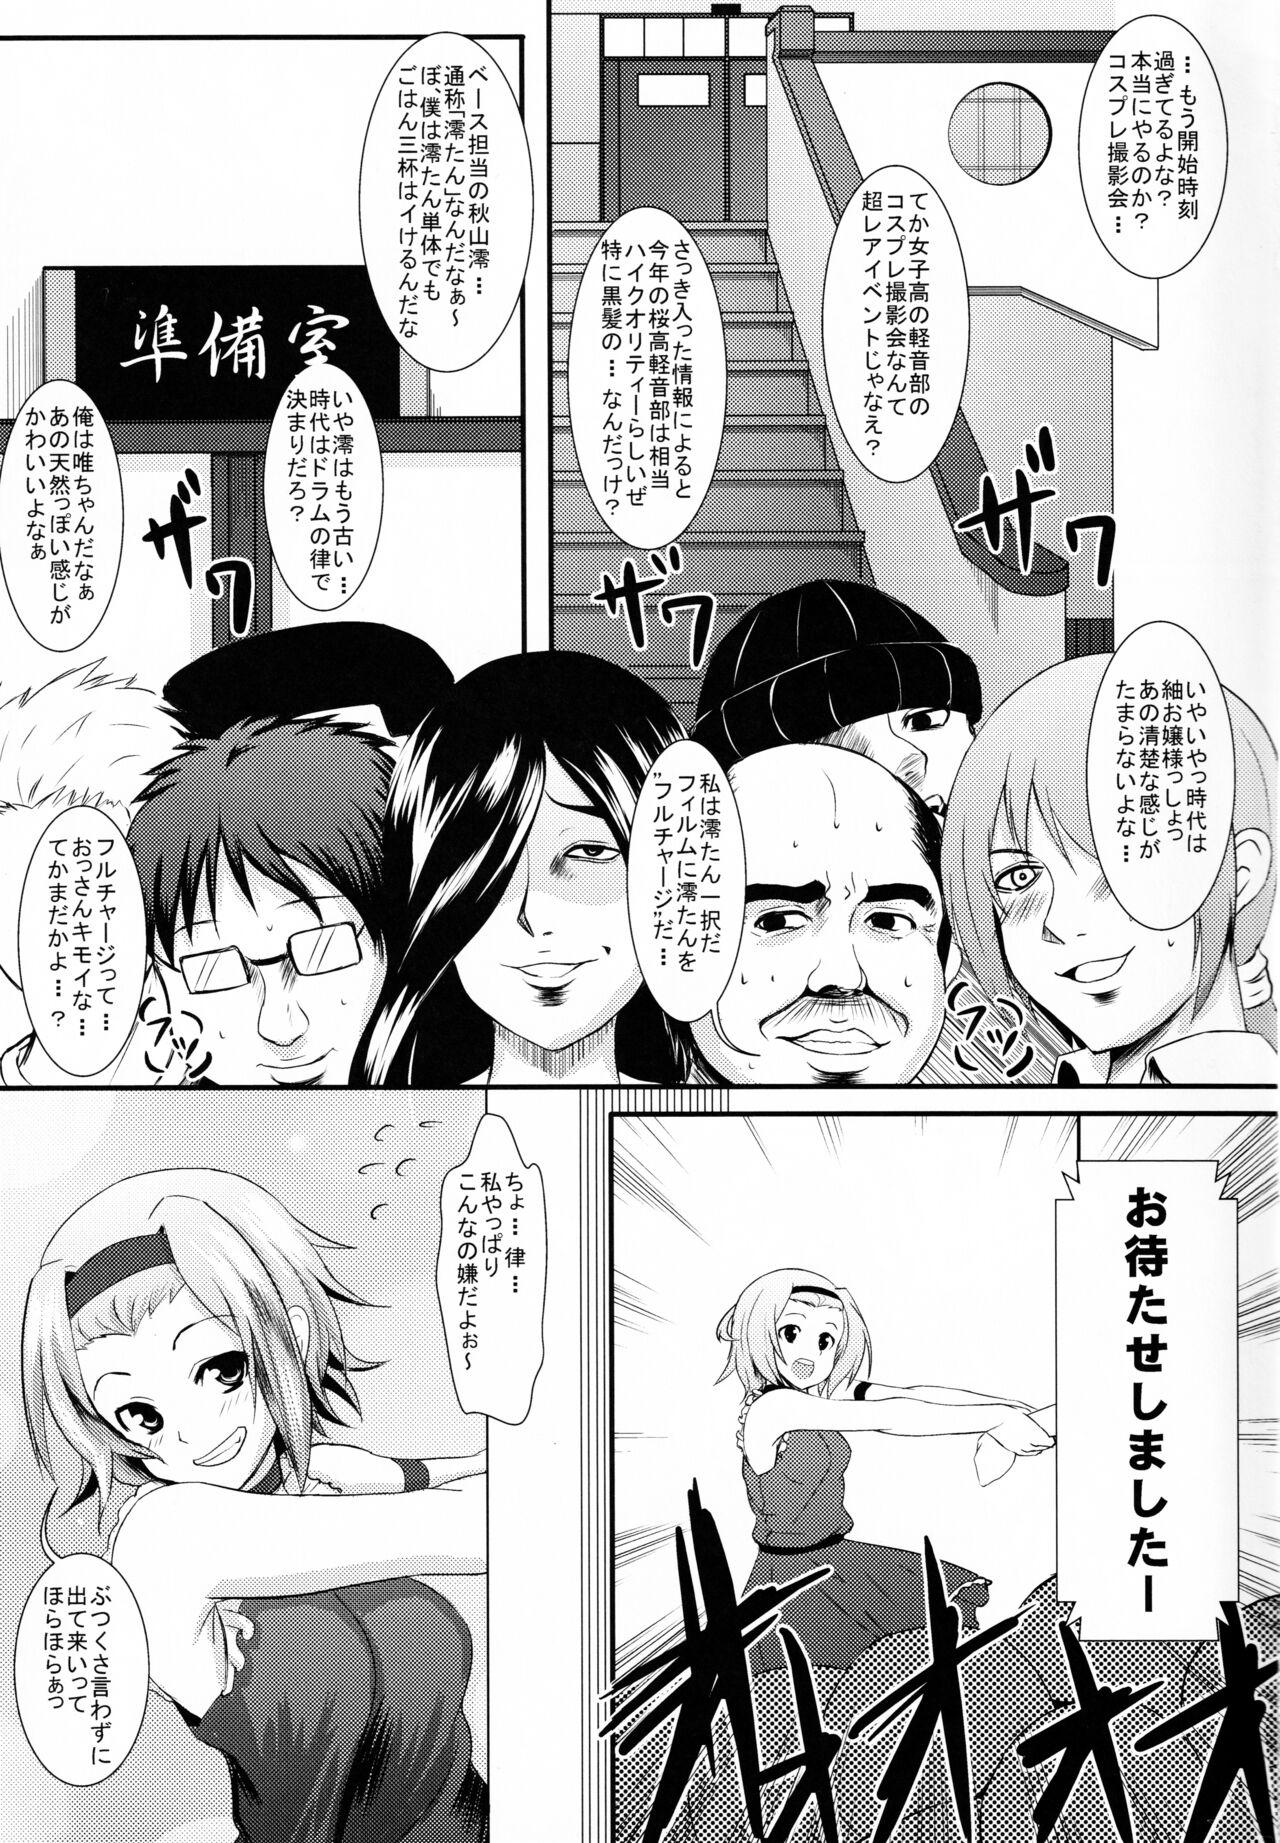 Office KKK - K on Futanari - Page 2